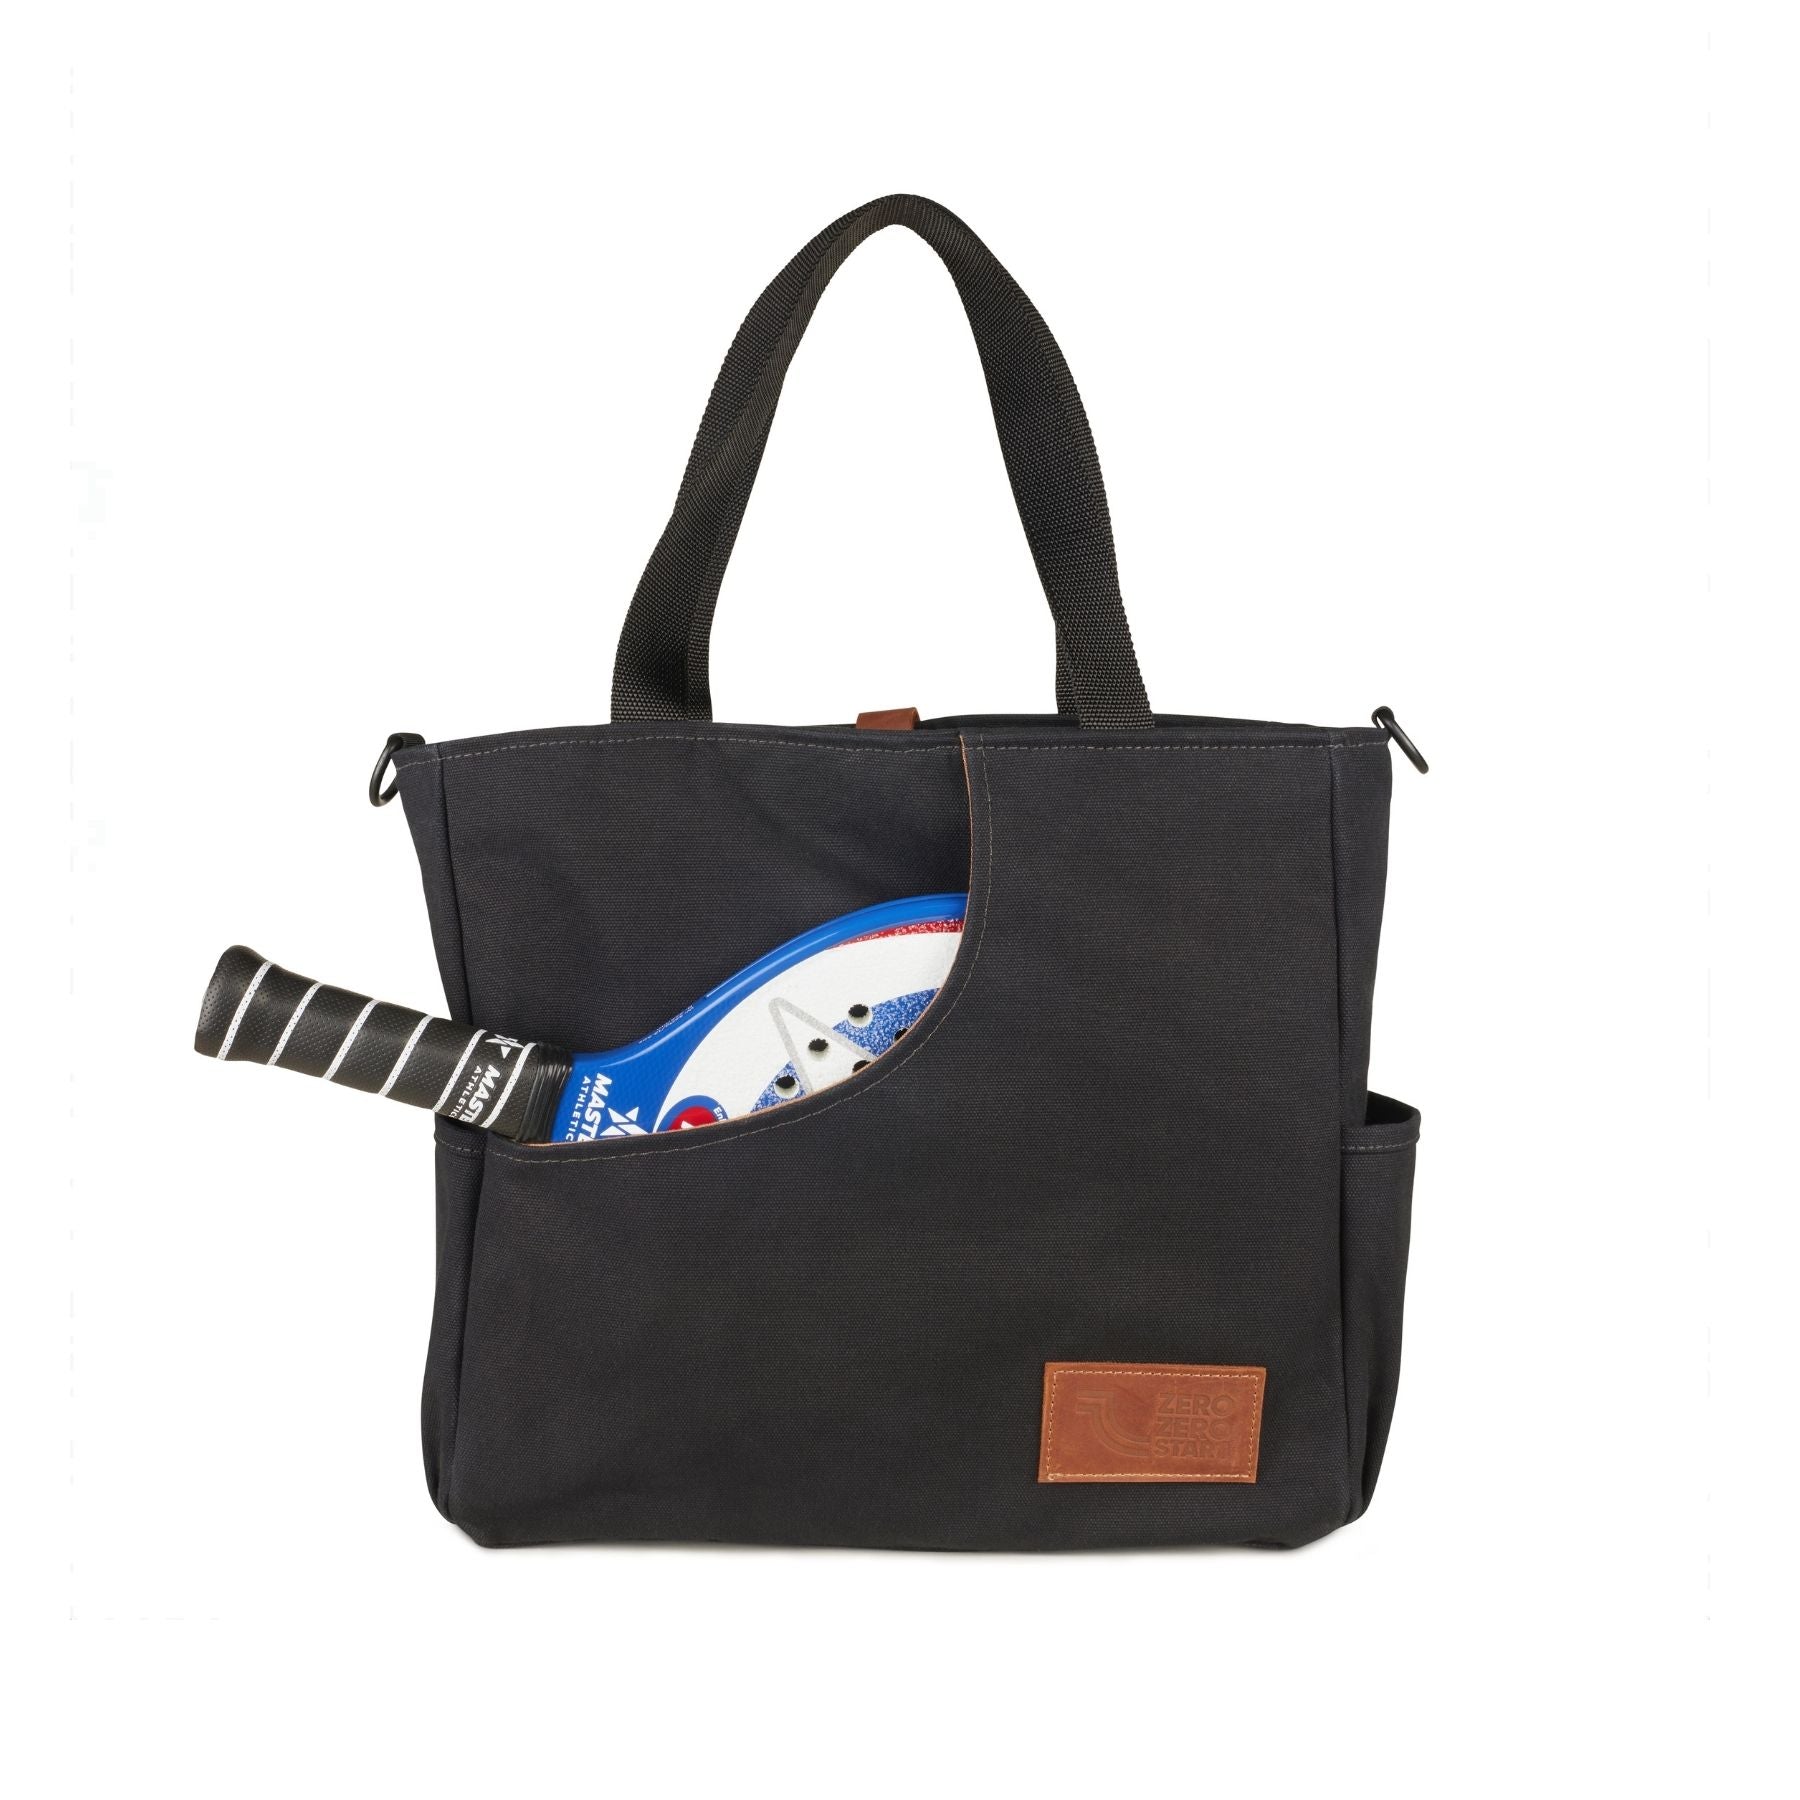 ZZS - Large Paddle Bag Black